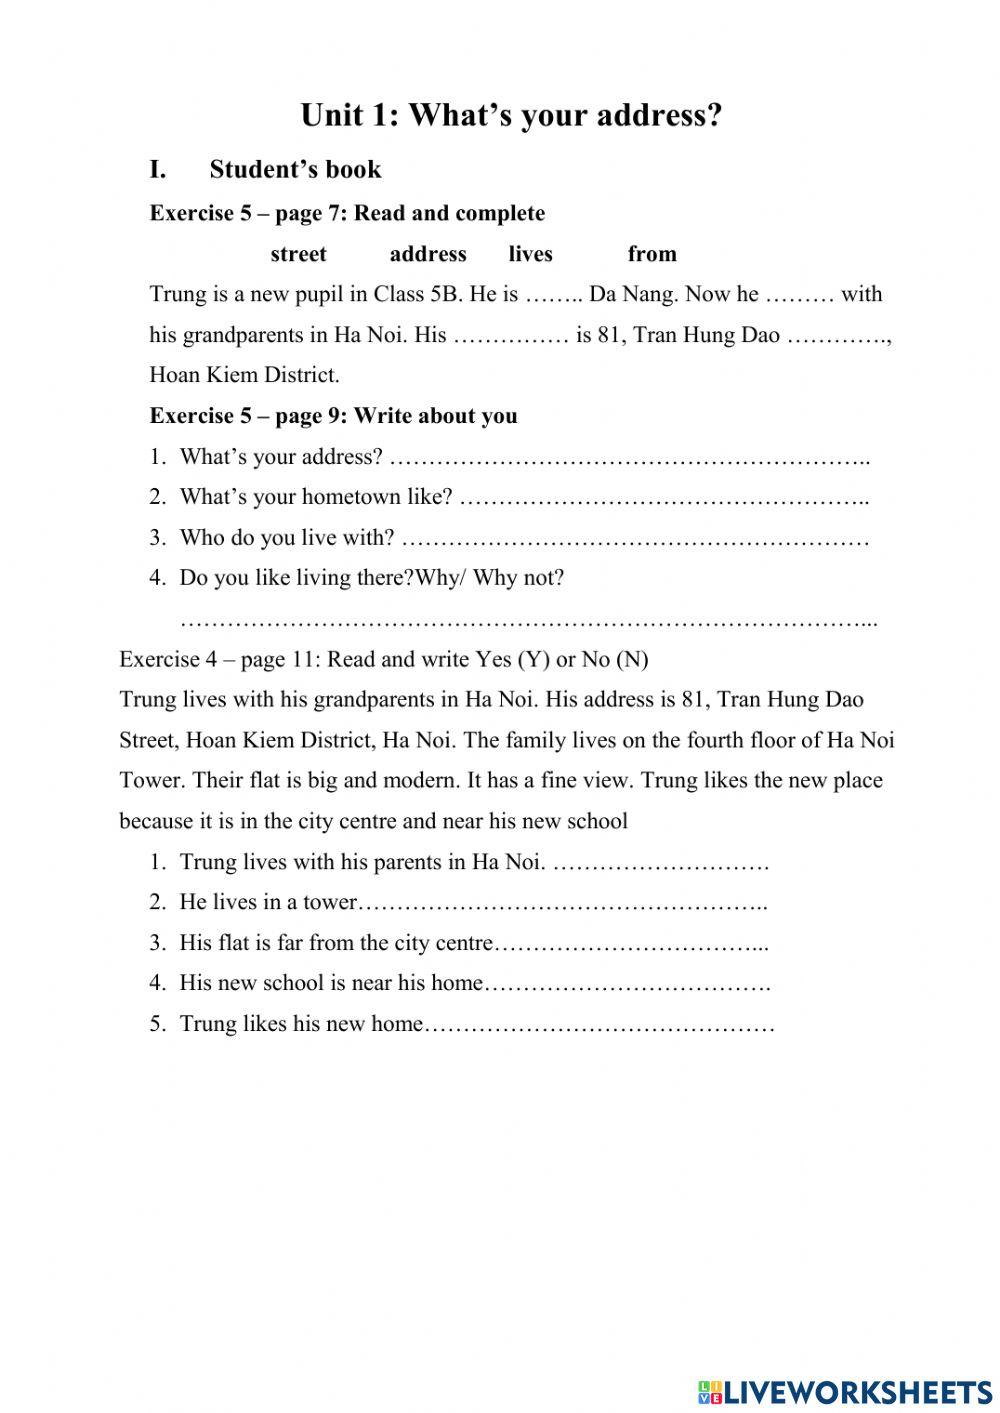 Unit 1 - Grade 5 - workbook